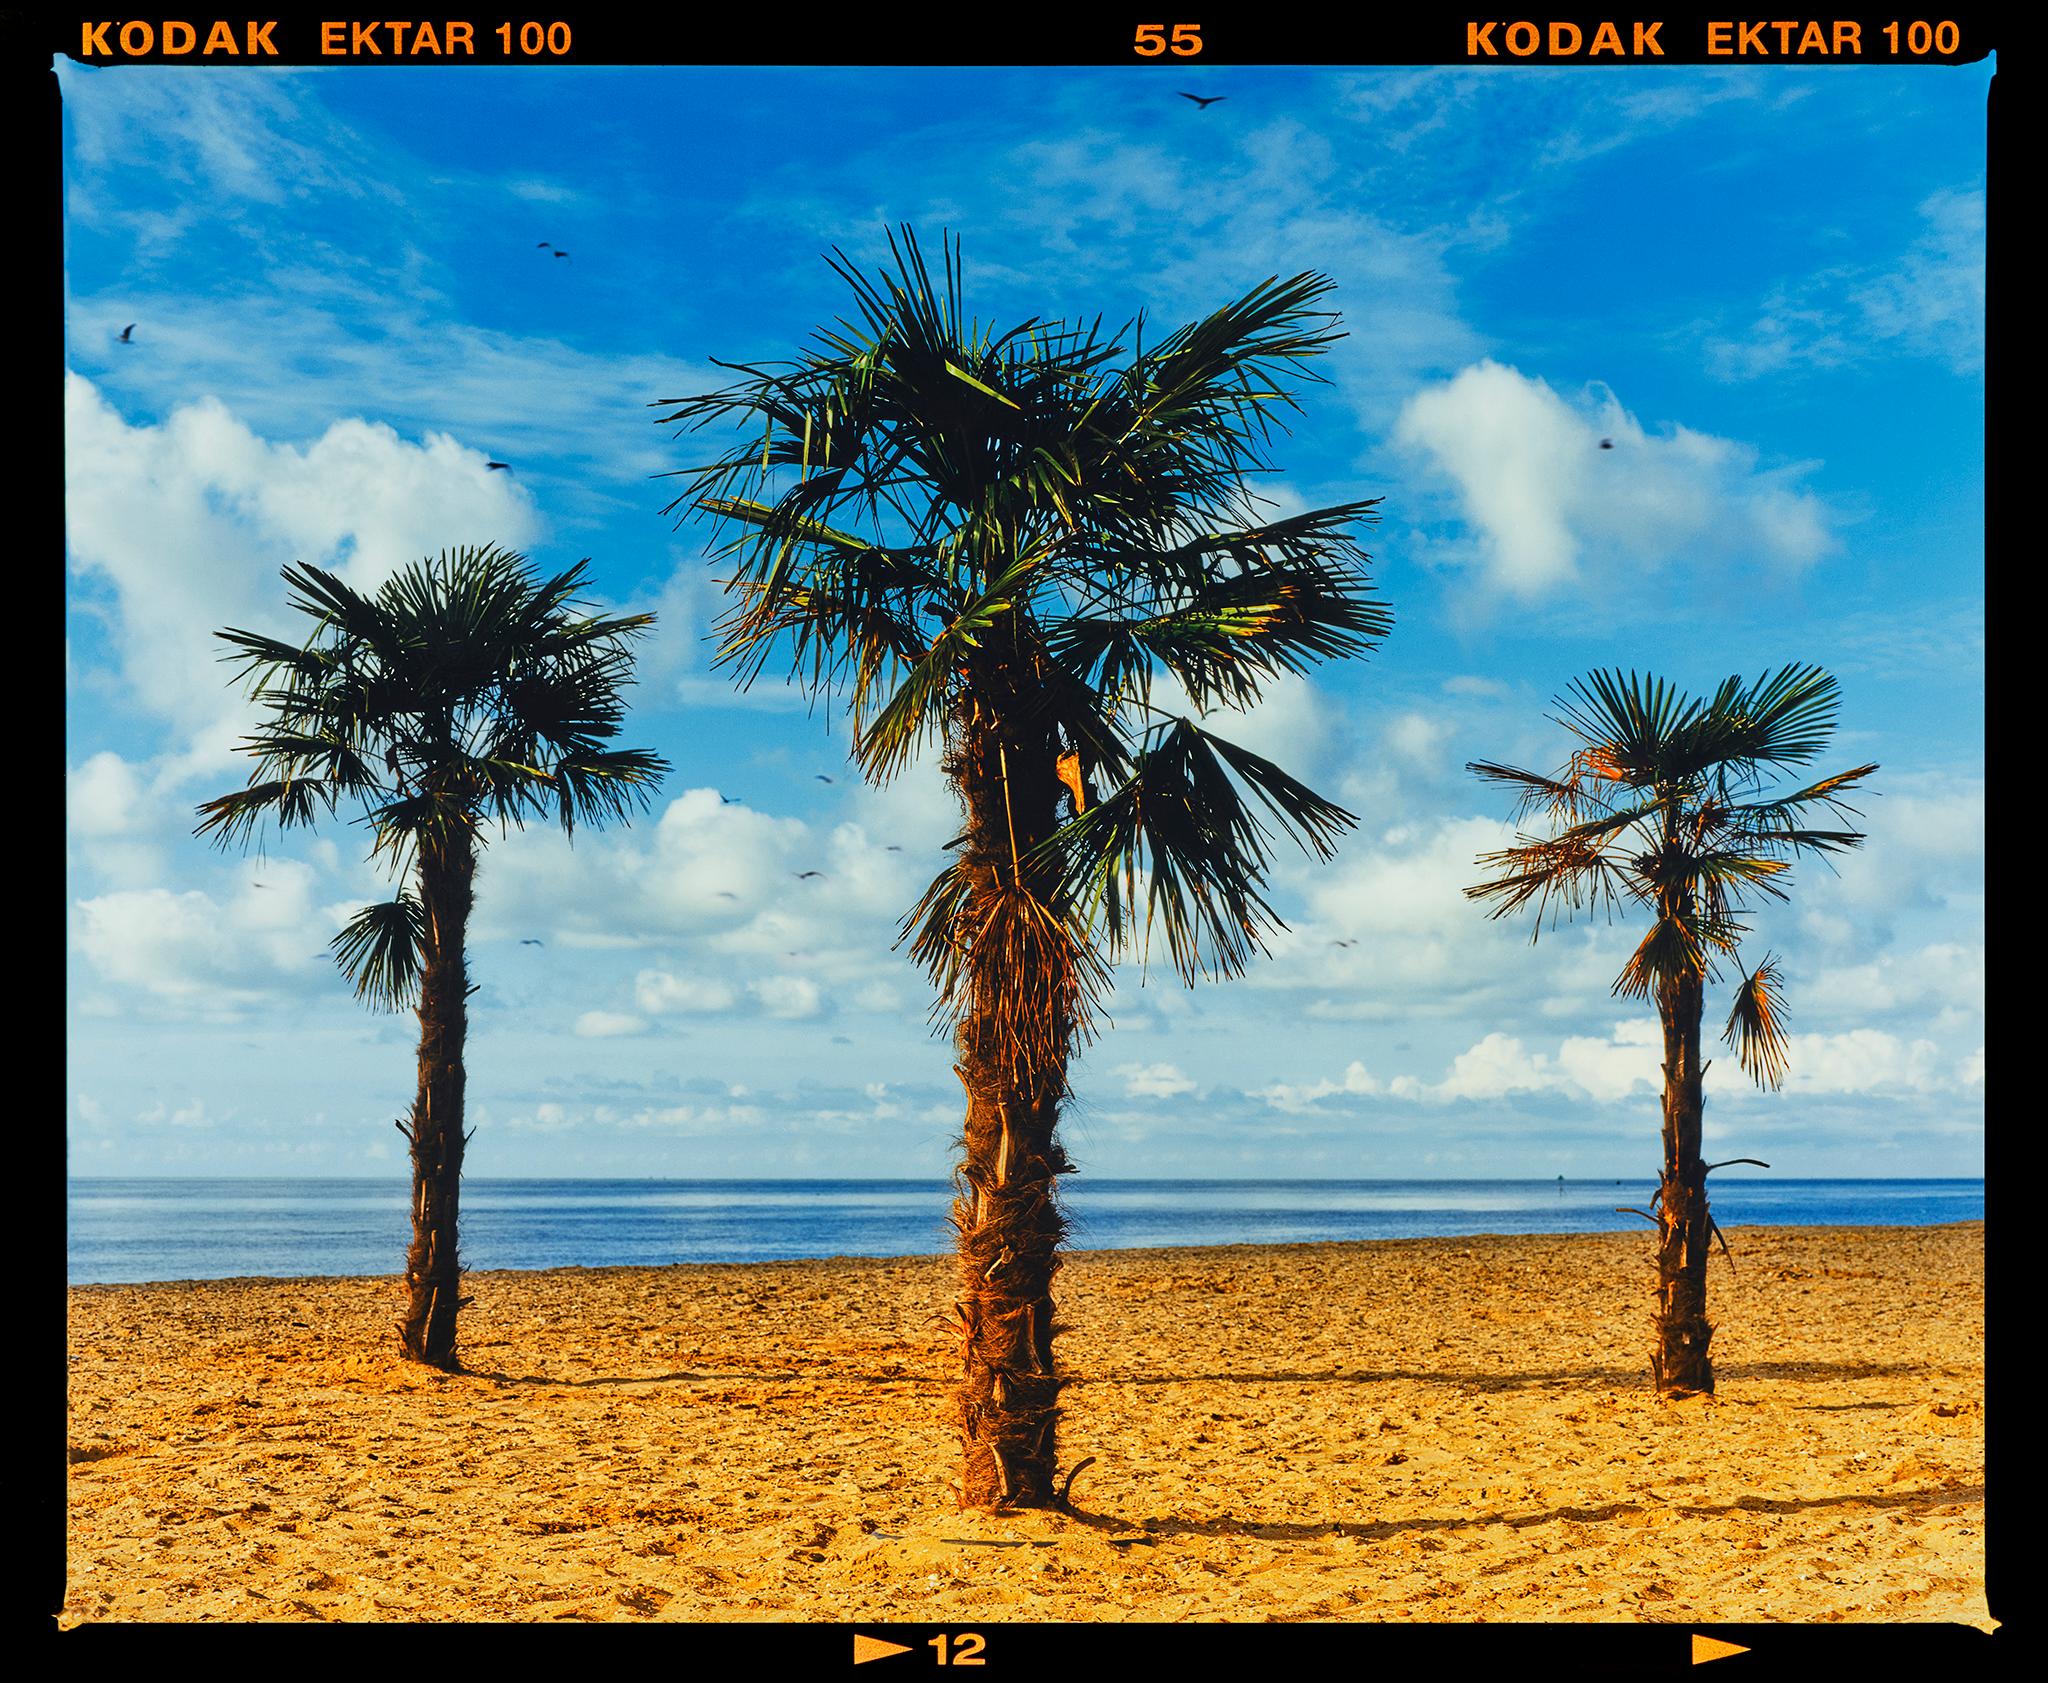 Richard Heeps Print - Three Palms, Clacton-on-Sea - Summer Beach Palm Tree Photograph